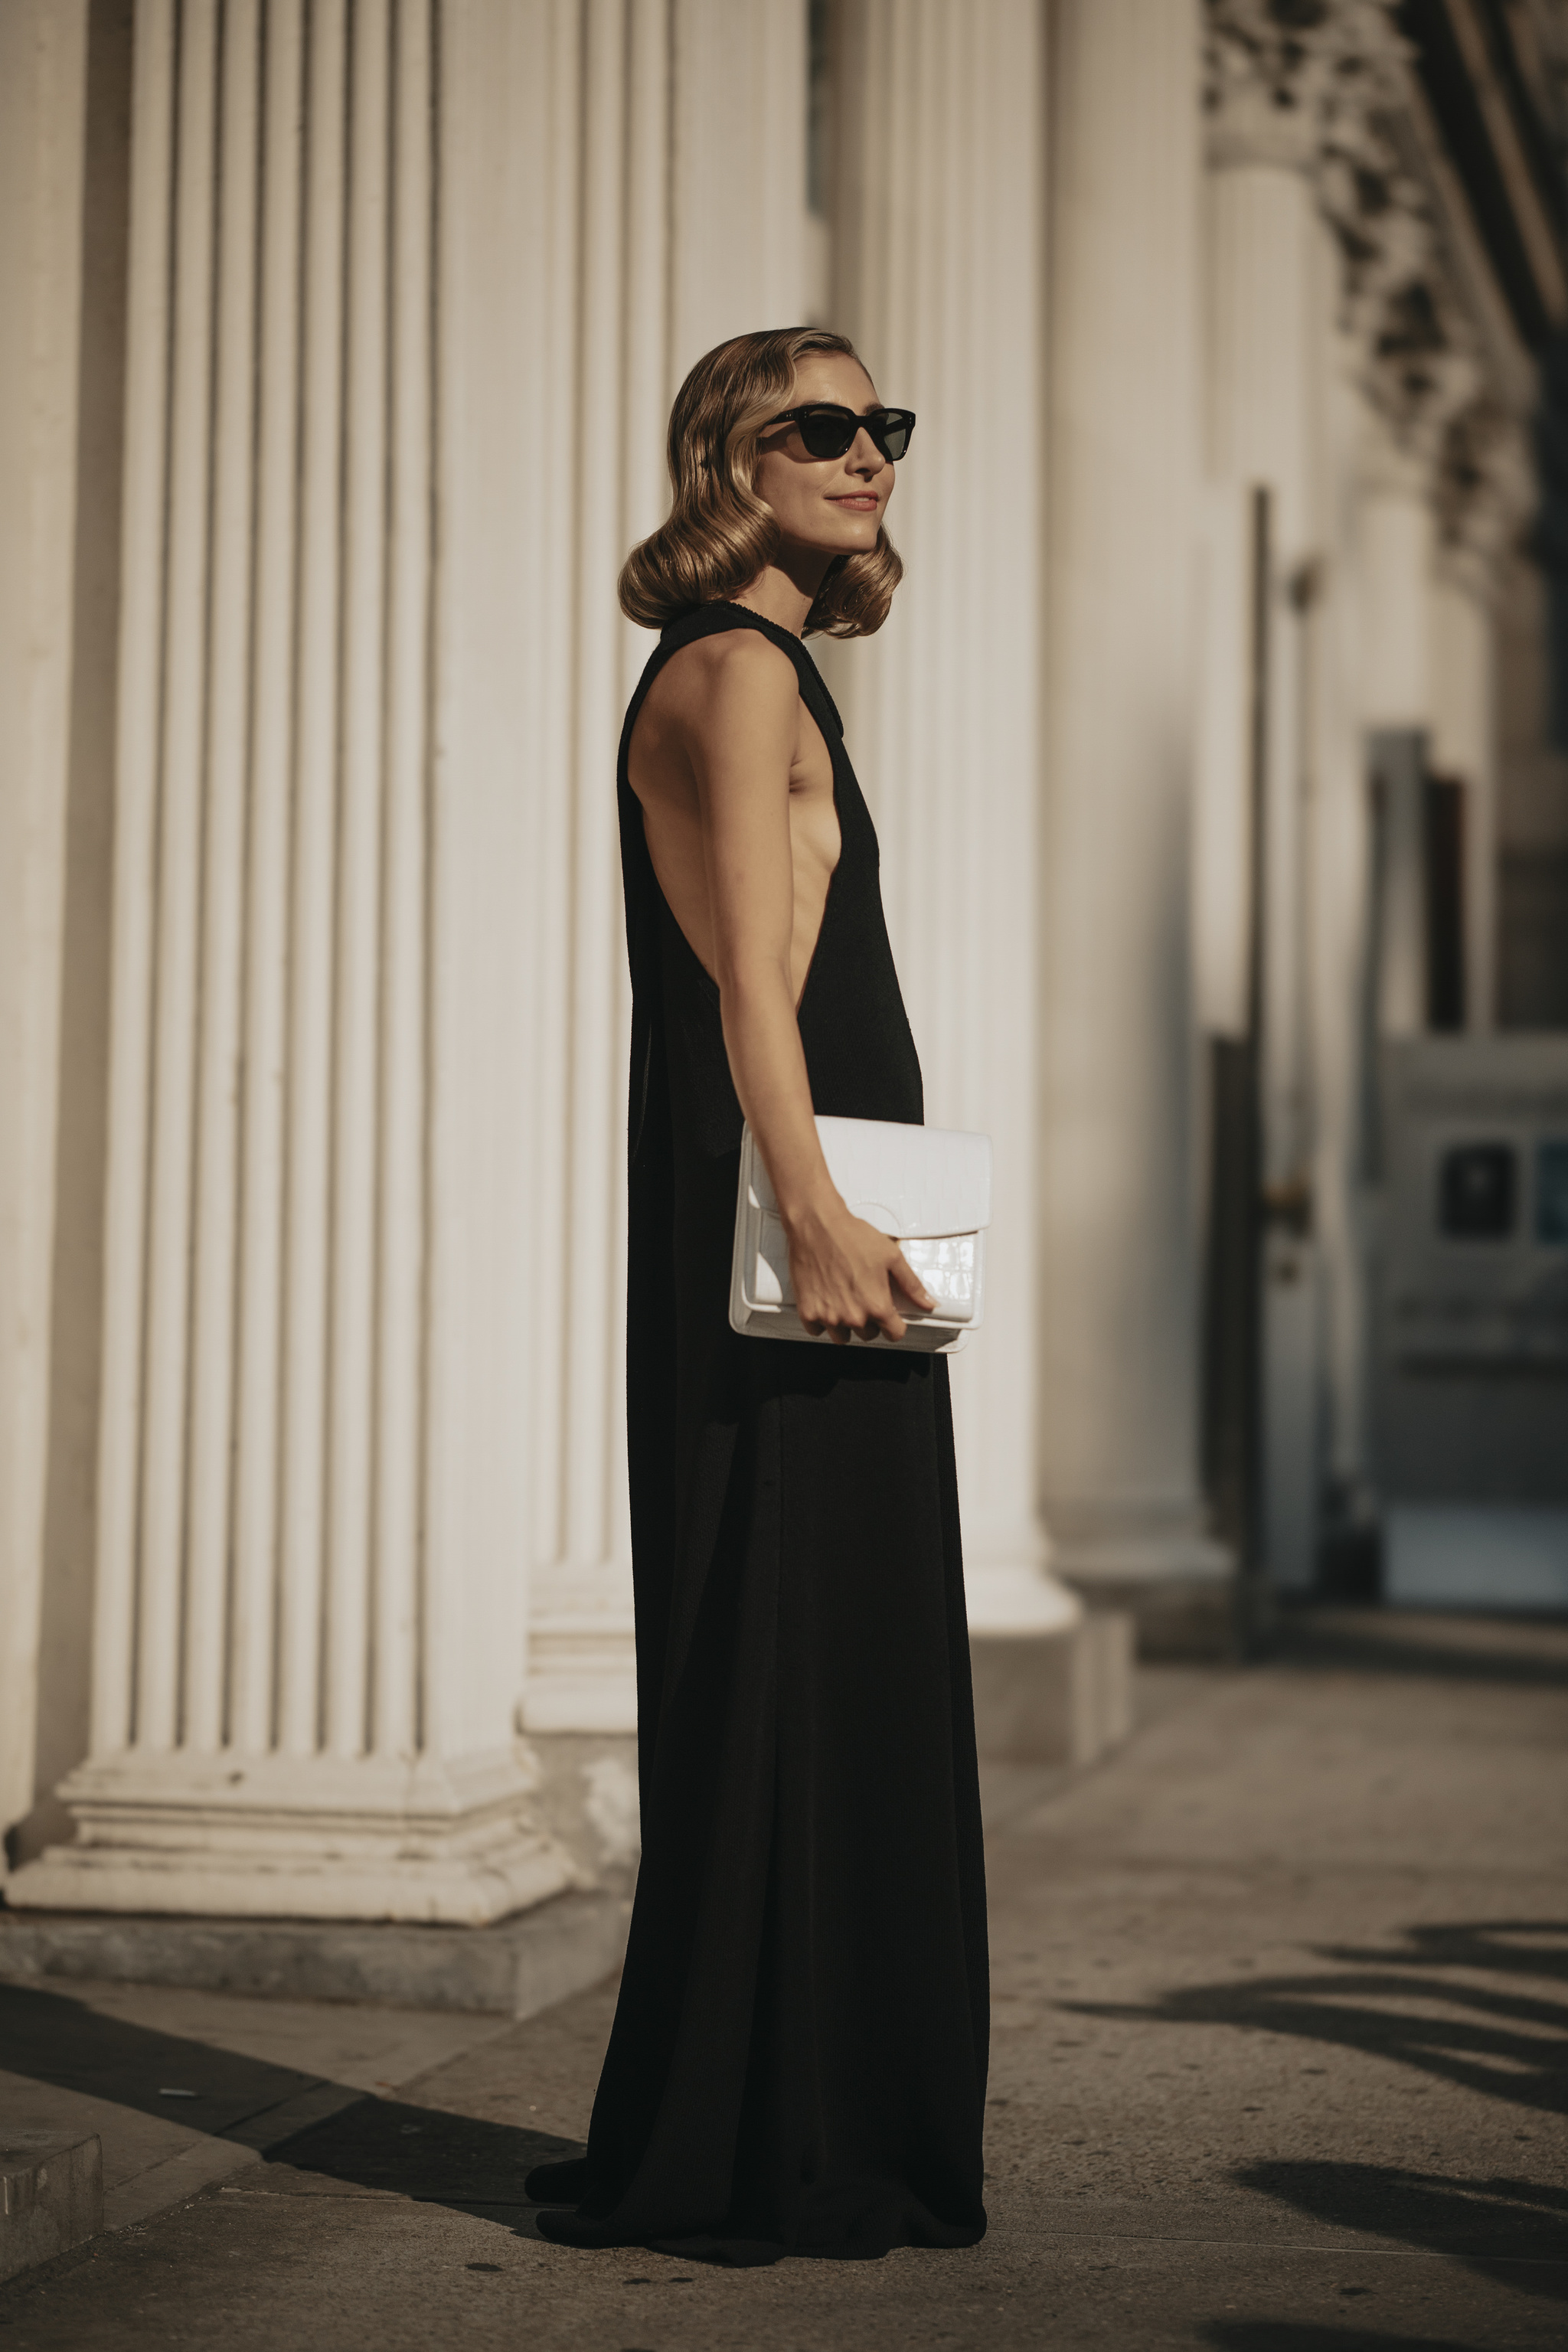 Jenny Walton con un vestido negro minimalista.